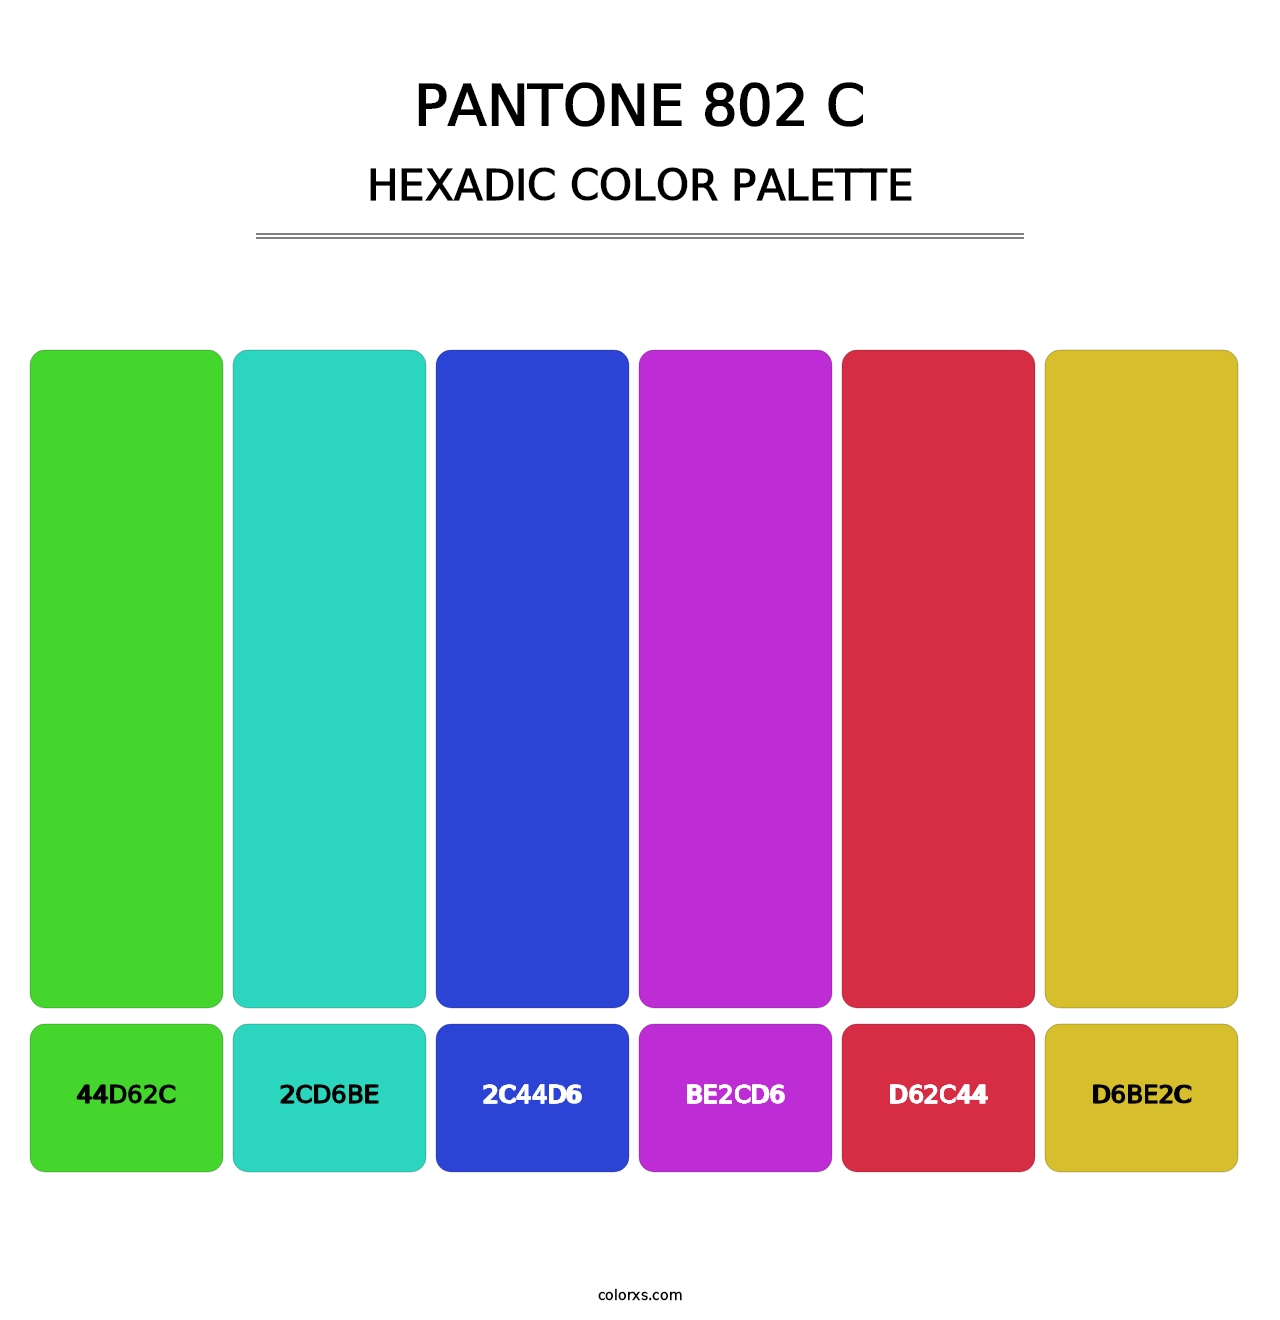 PANTONE 802 C - Hexadic Color Palette